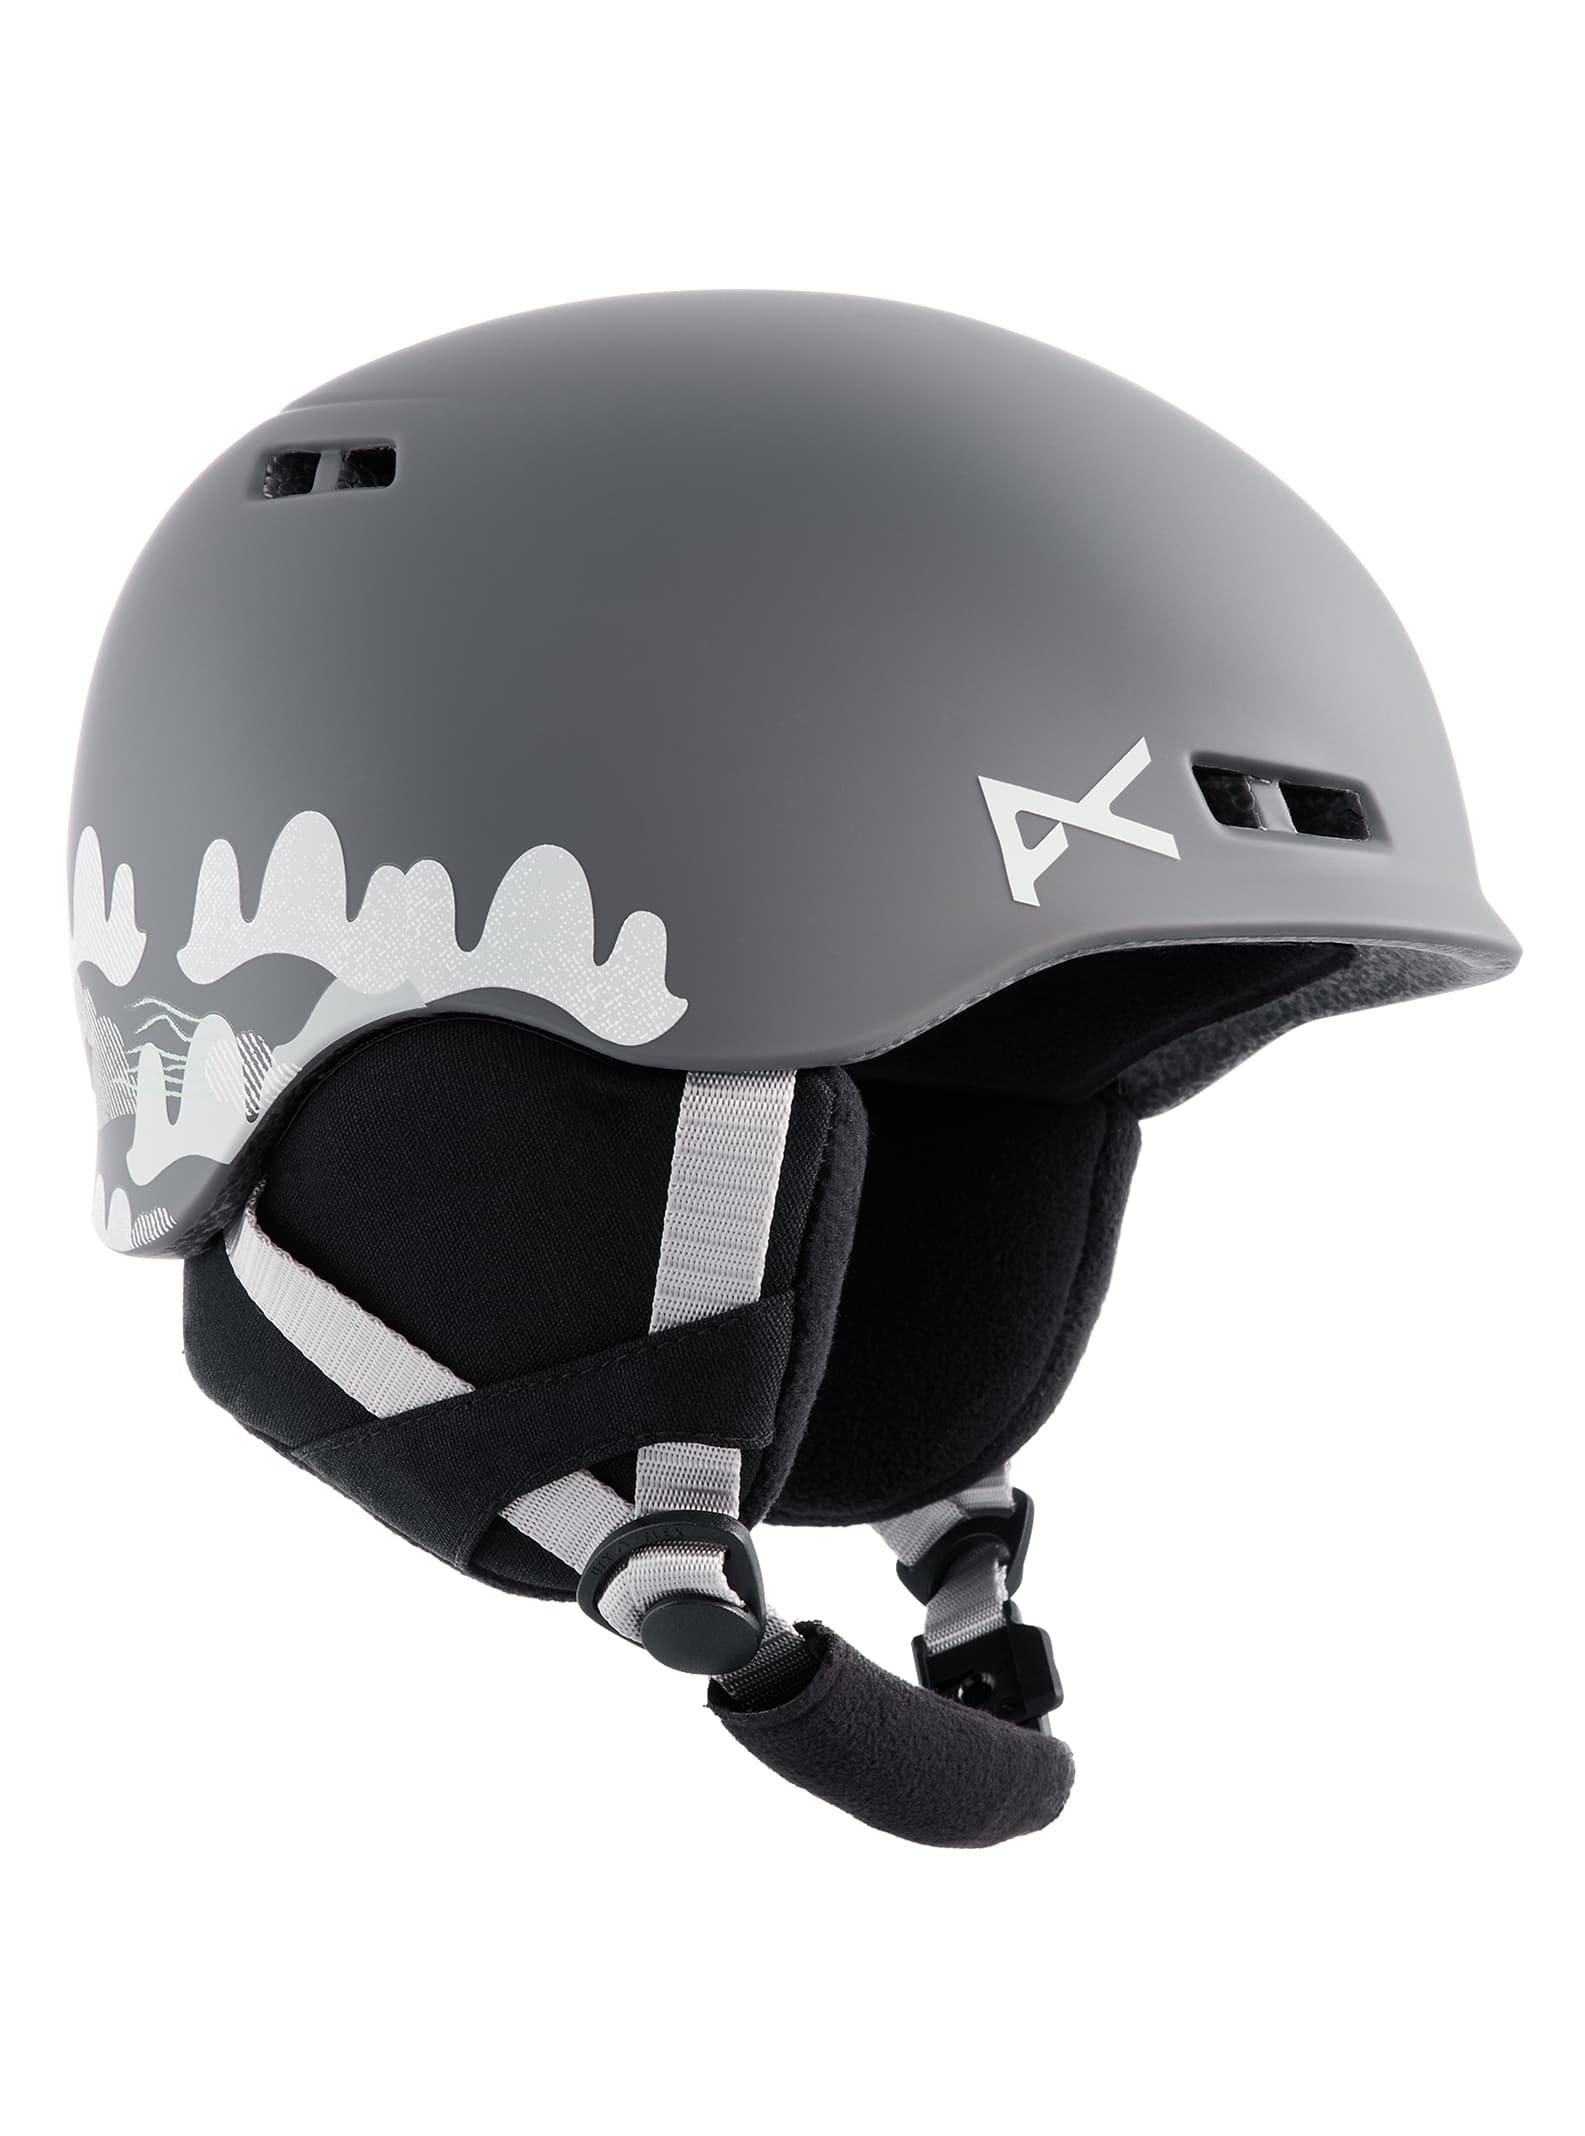 Details about   Anon Burner Kids Ski Helmet Snowboard Winter Sports Protection 